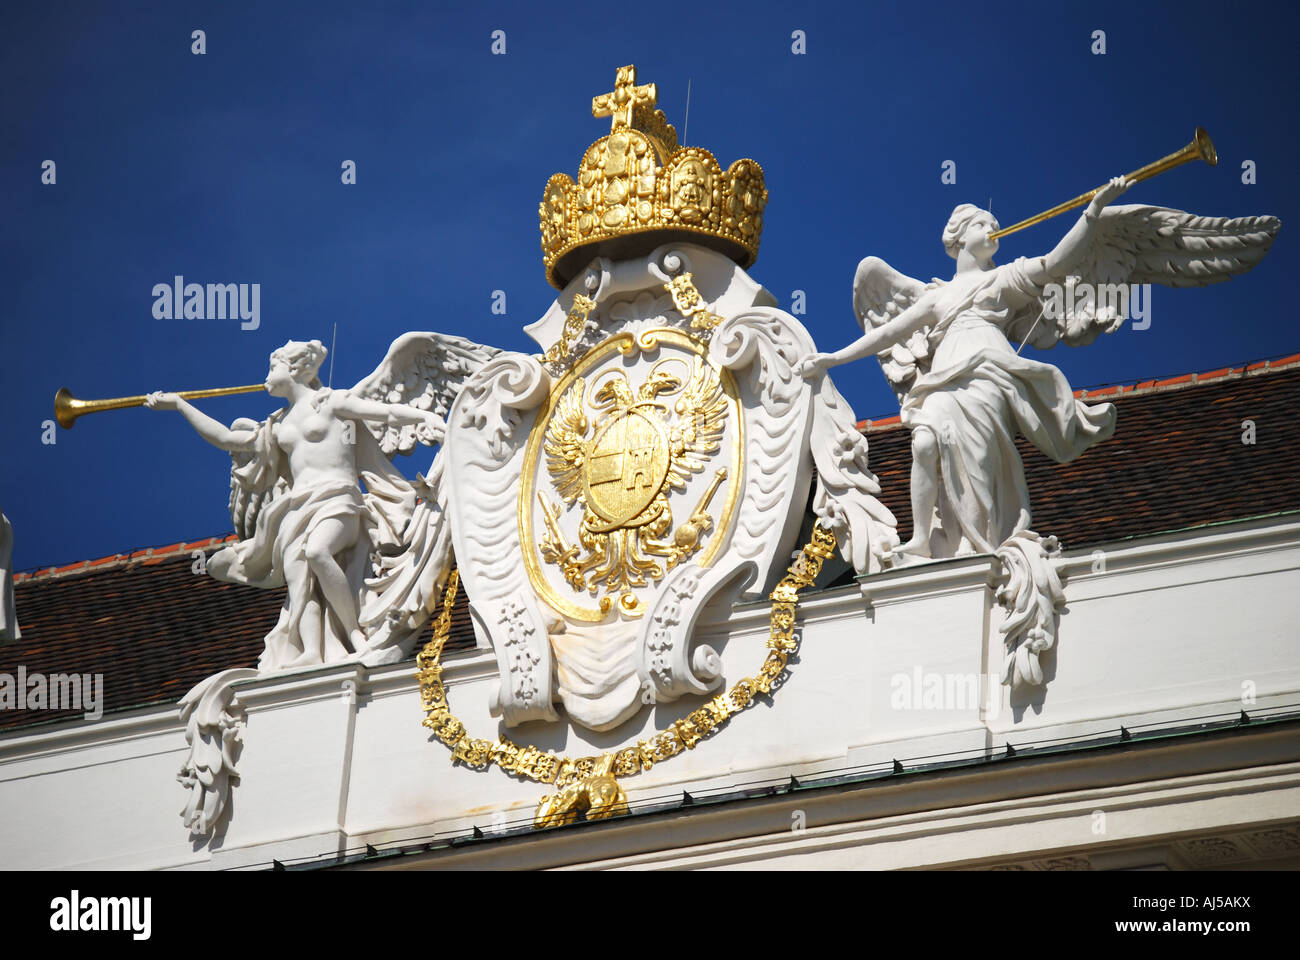 Coat of Arms, Hofburg Palace, Hofburg Quarter, Vienna, Wein, Republic of Austria Stock Photo